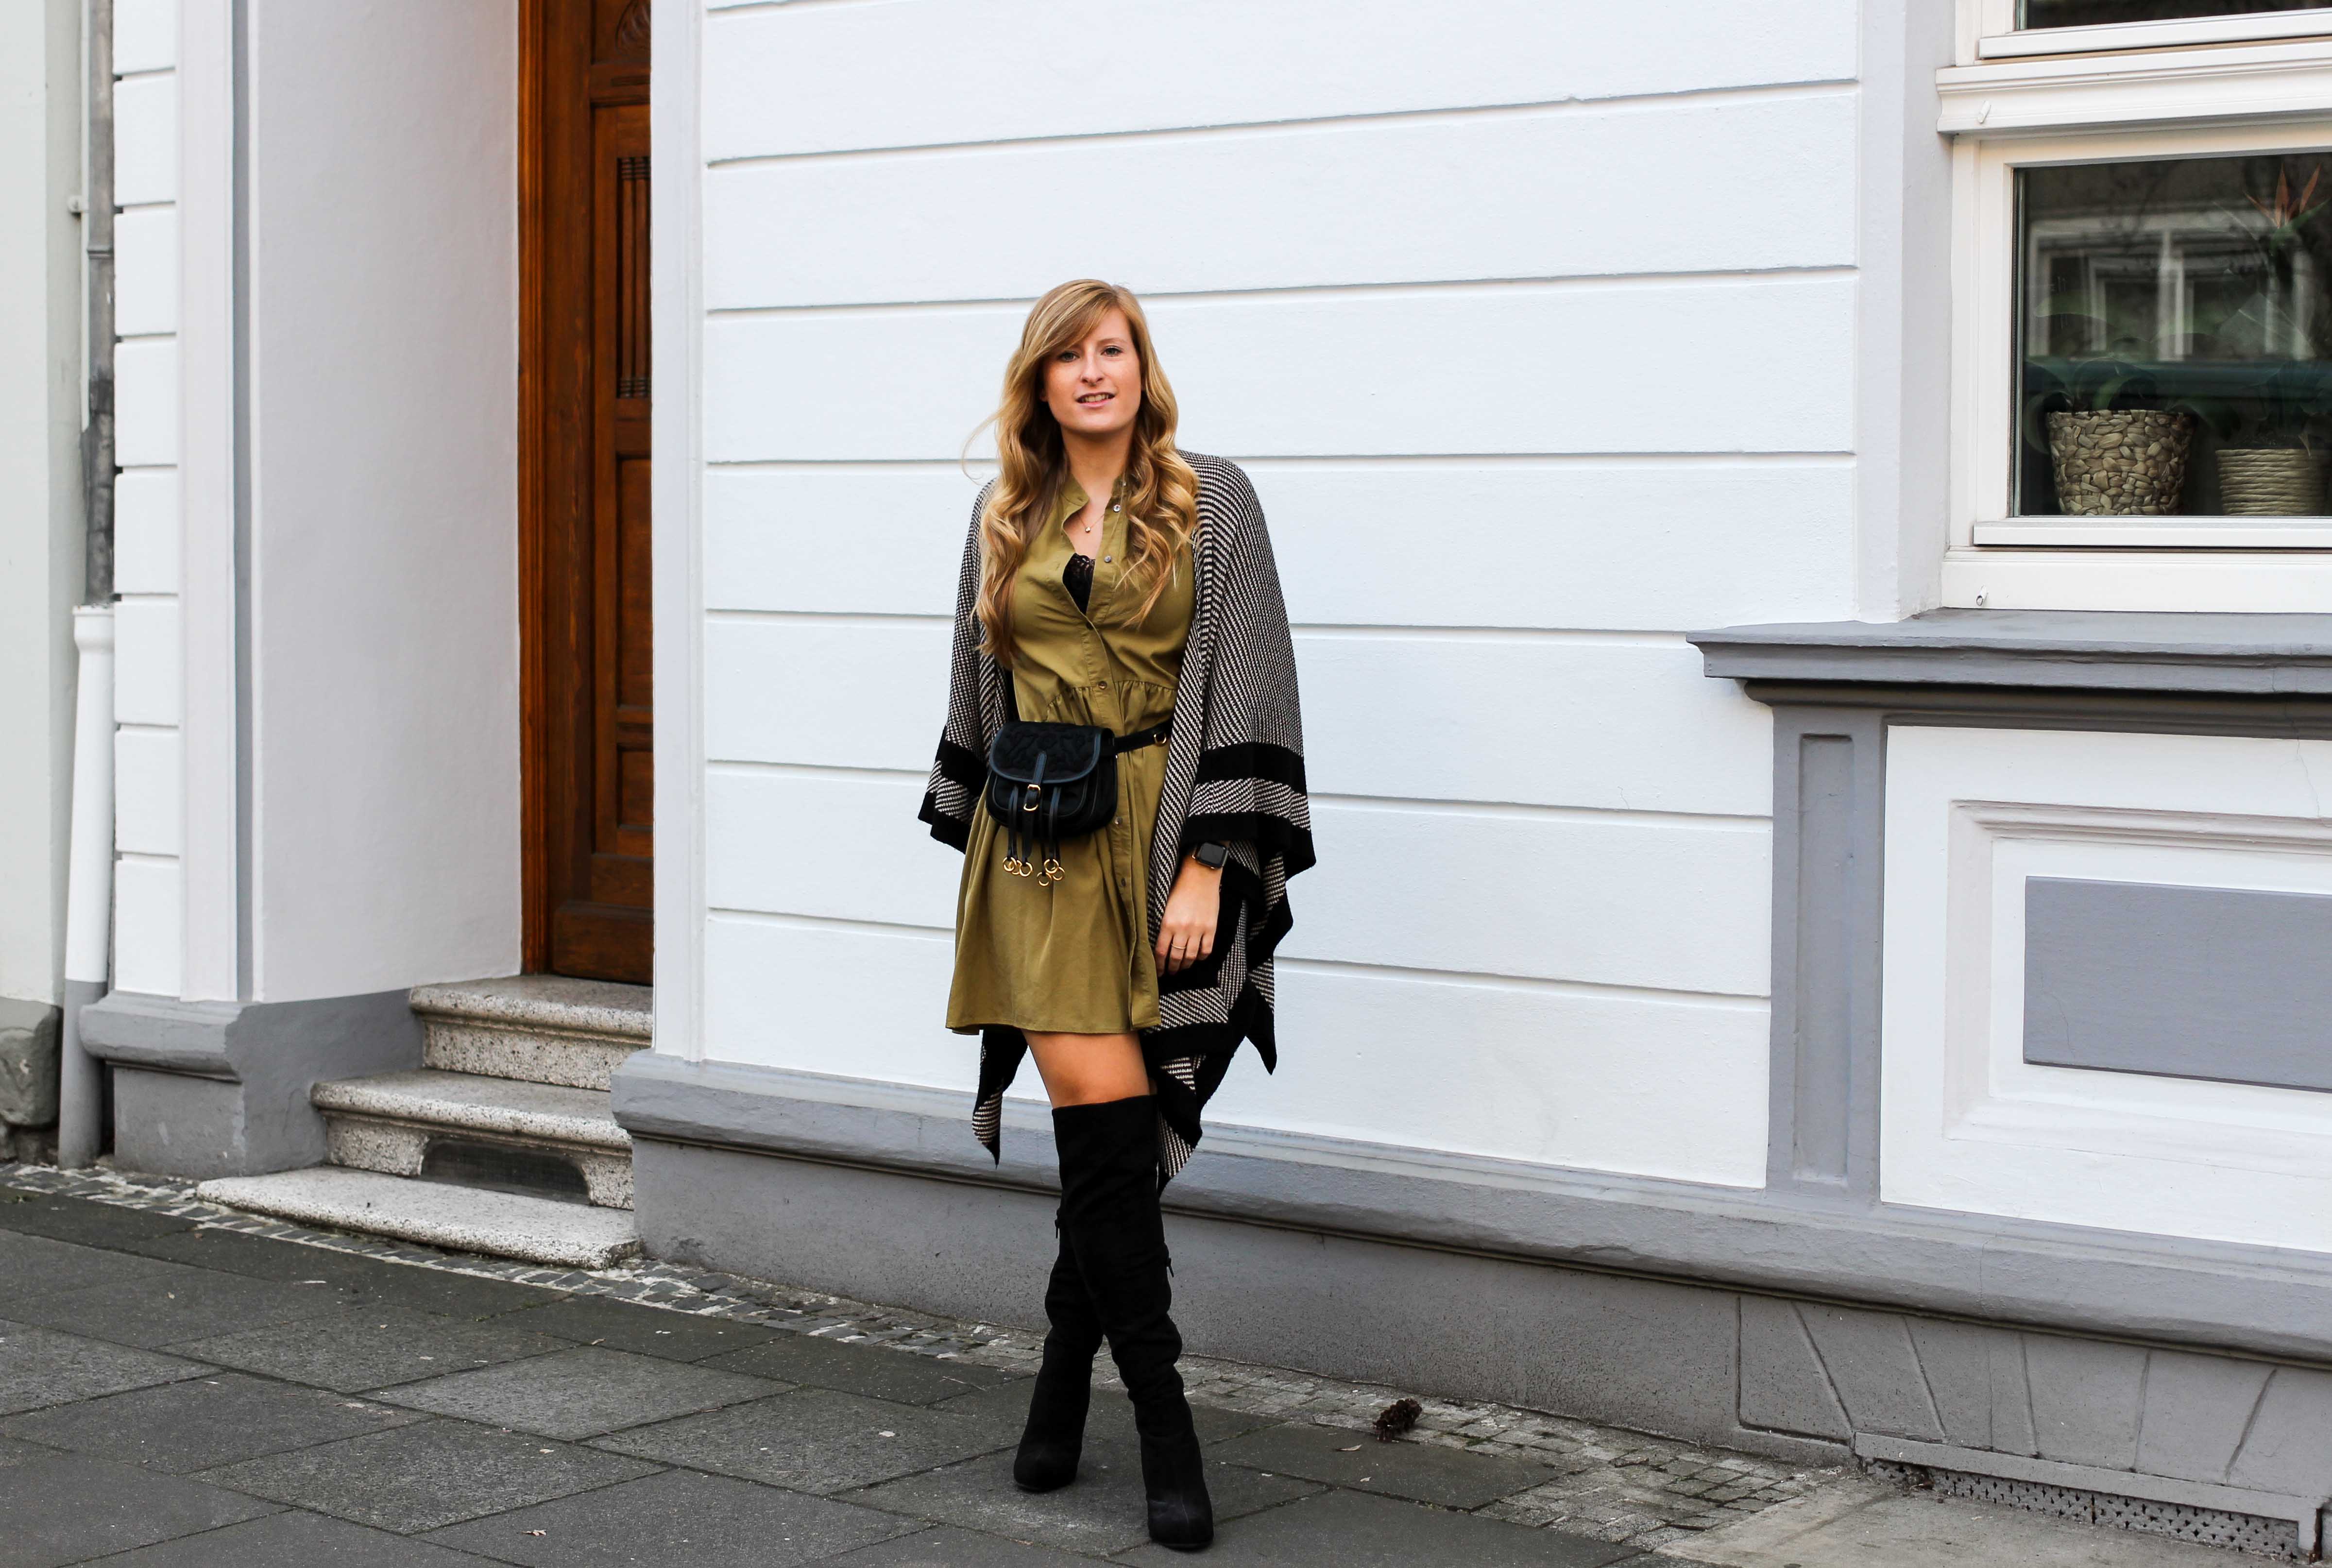 Overknees Gürteltasche Prada Poncho Second-Hand Kleidung kombinieren Streetstyle Outfit Bonn Zara Kleid grün Frühling 2019 92